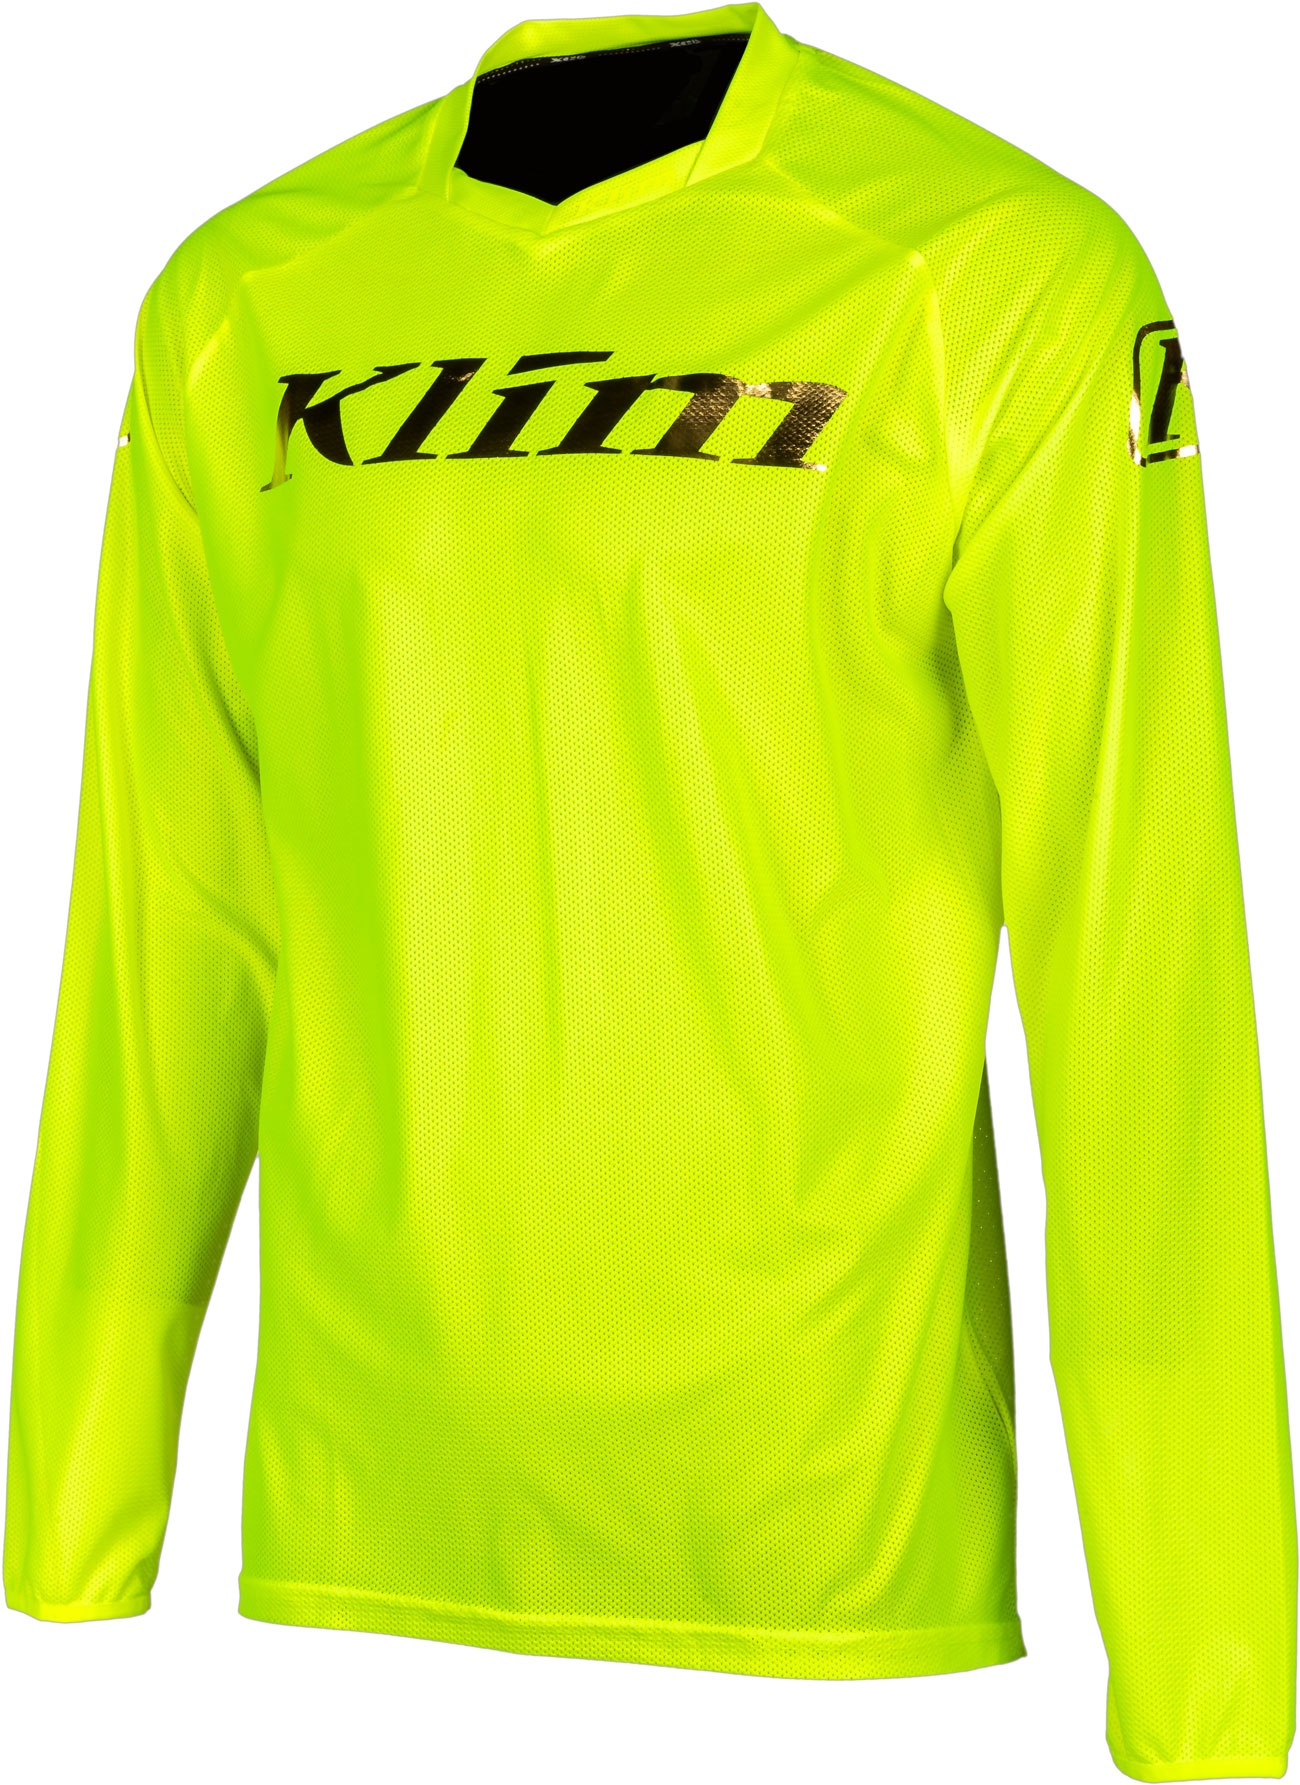 Klim XC Lite Gold S22, jersey - Jaune Néon/Or - L